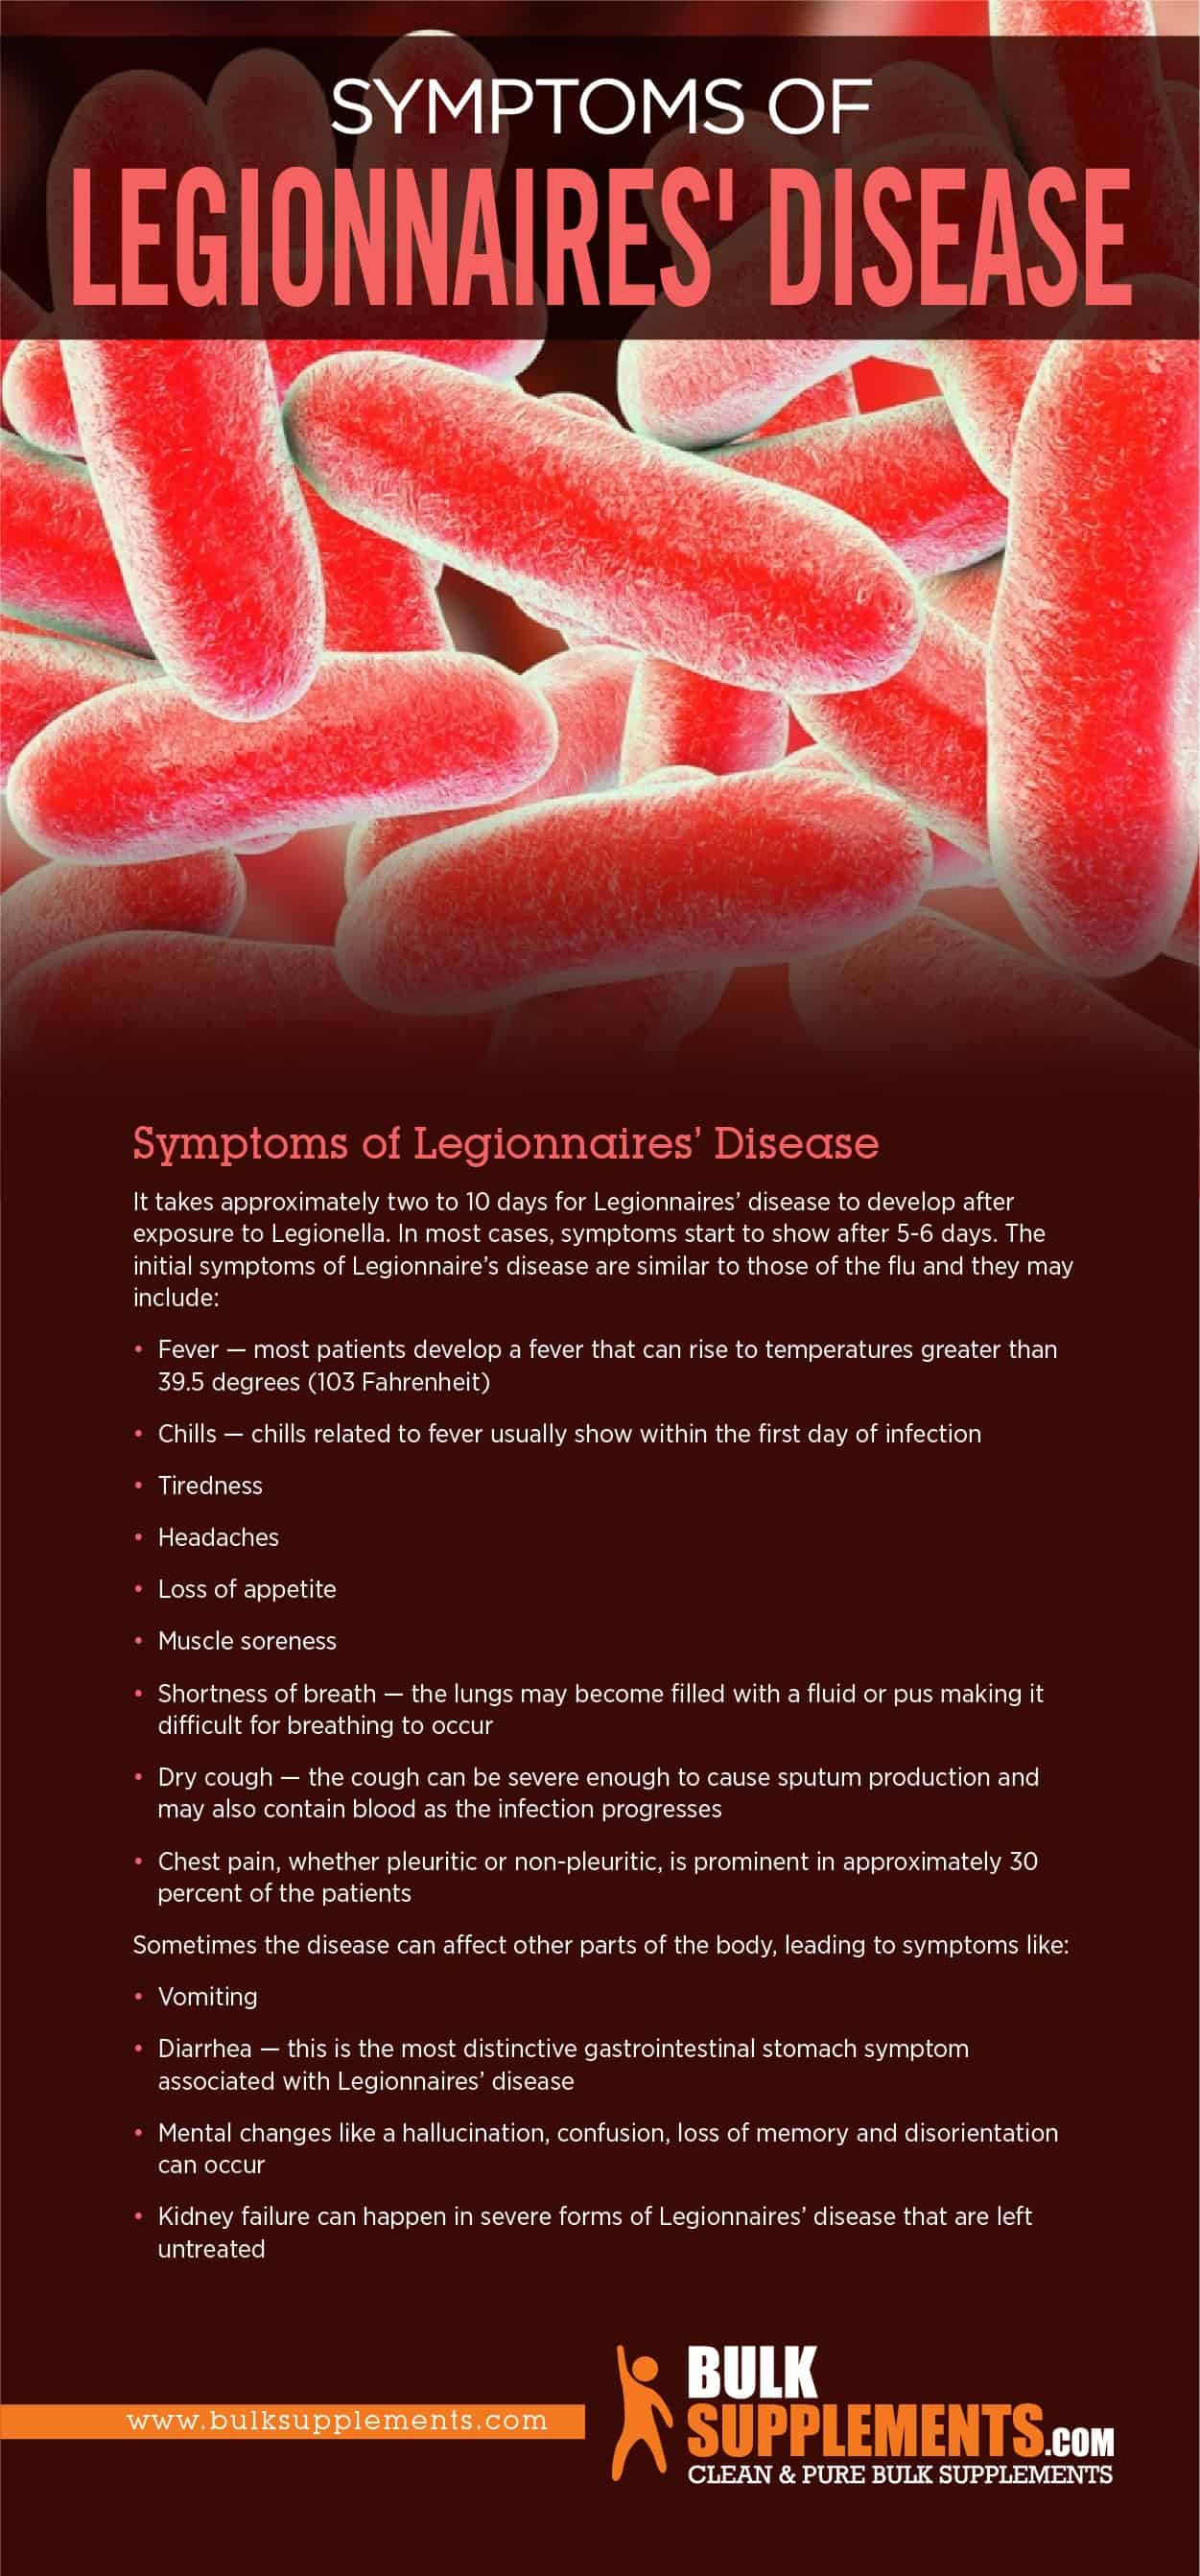 Symptoms of Legionnaires' Disease